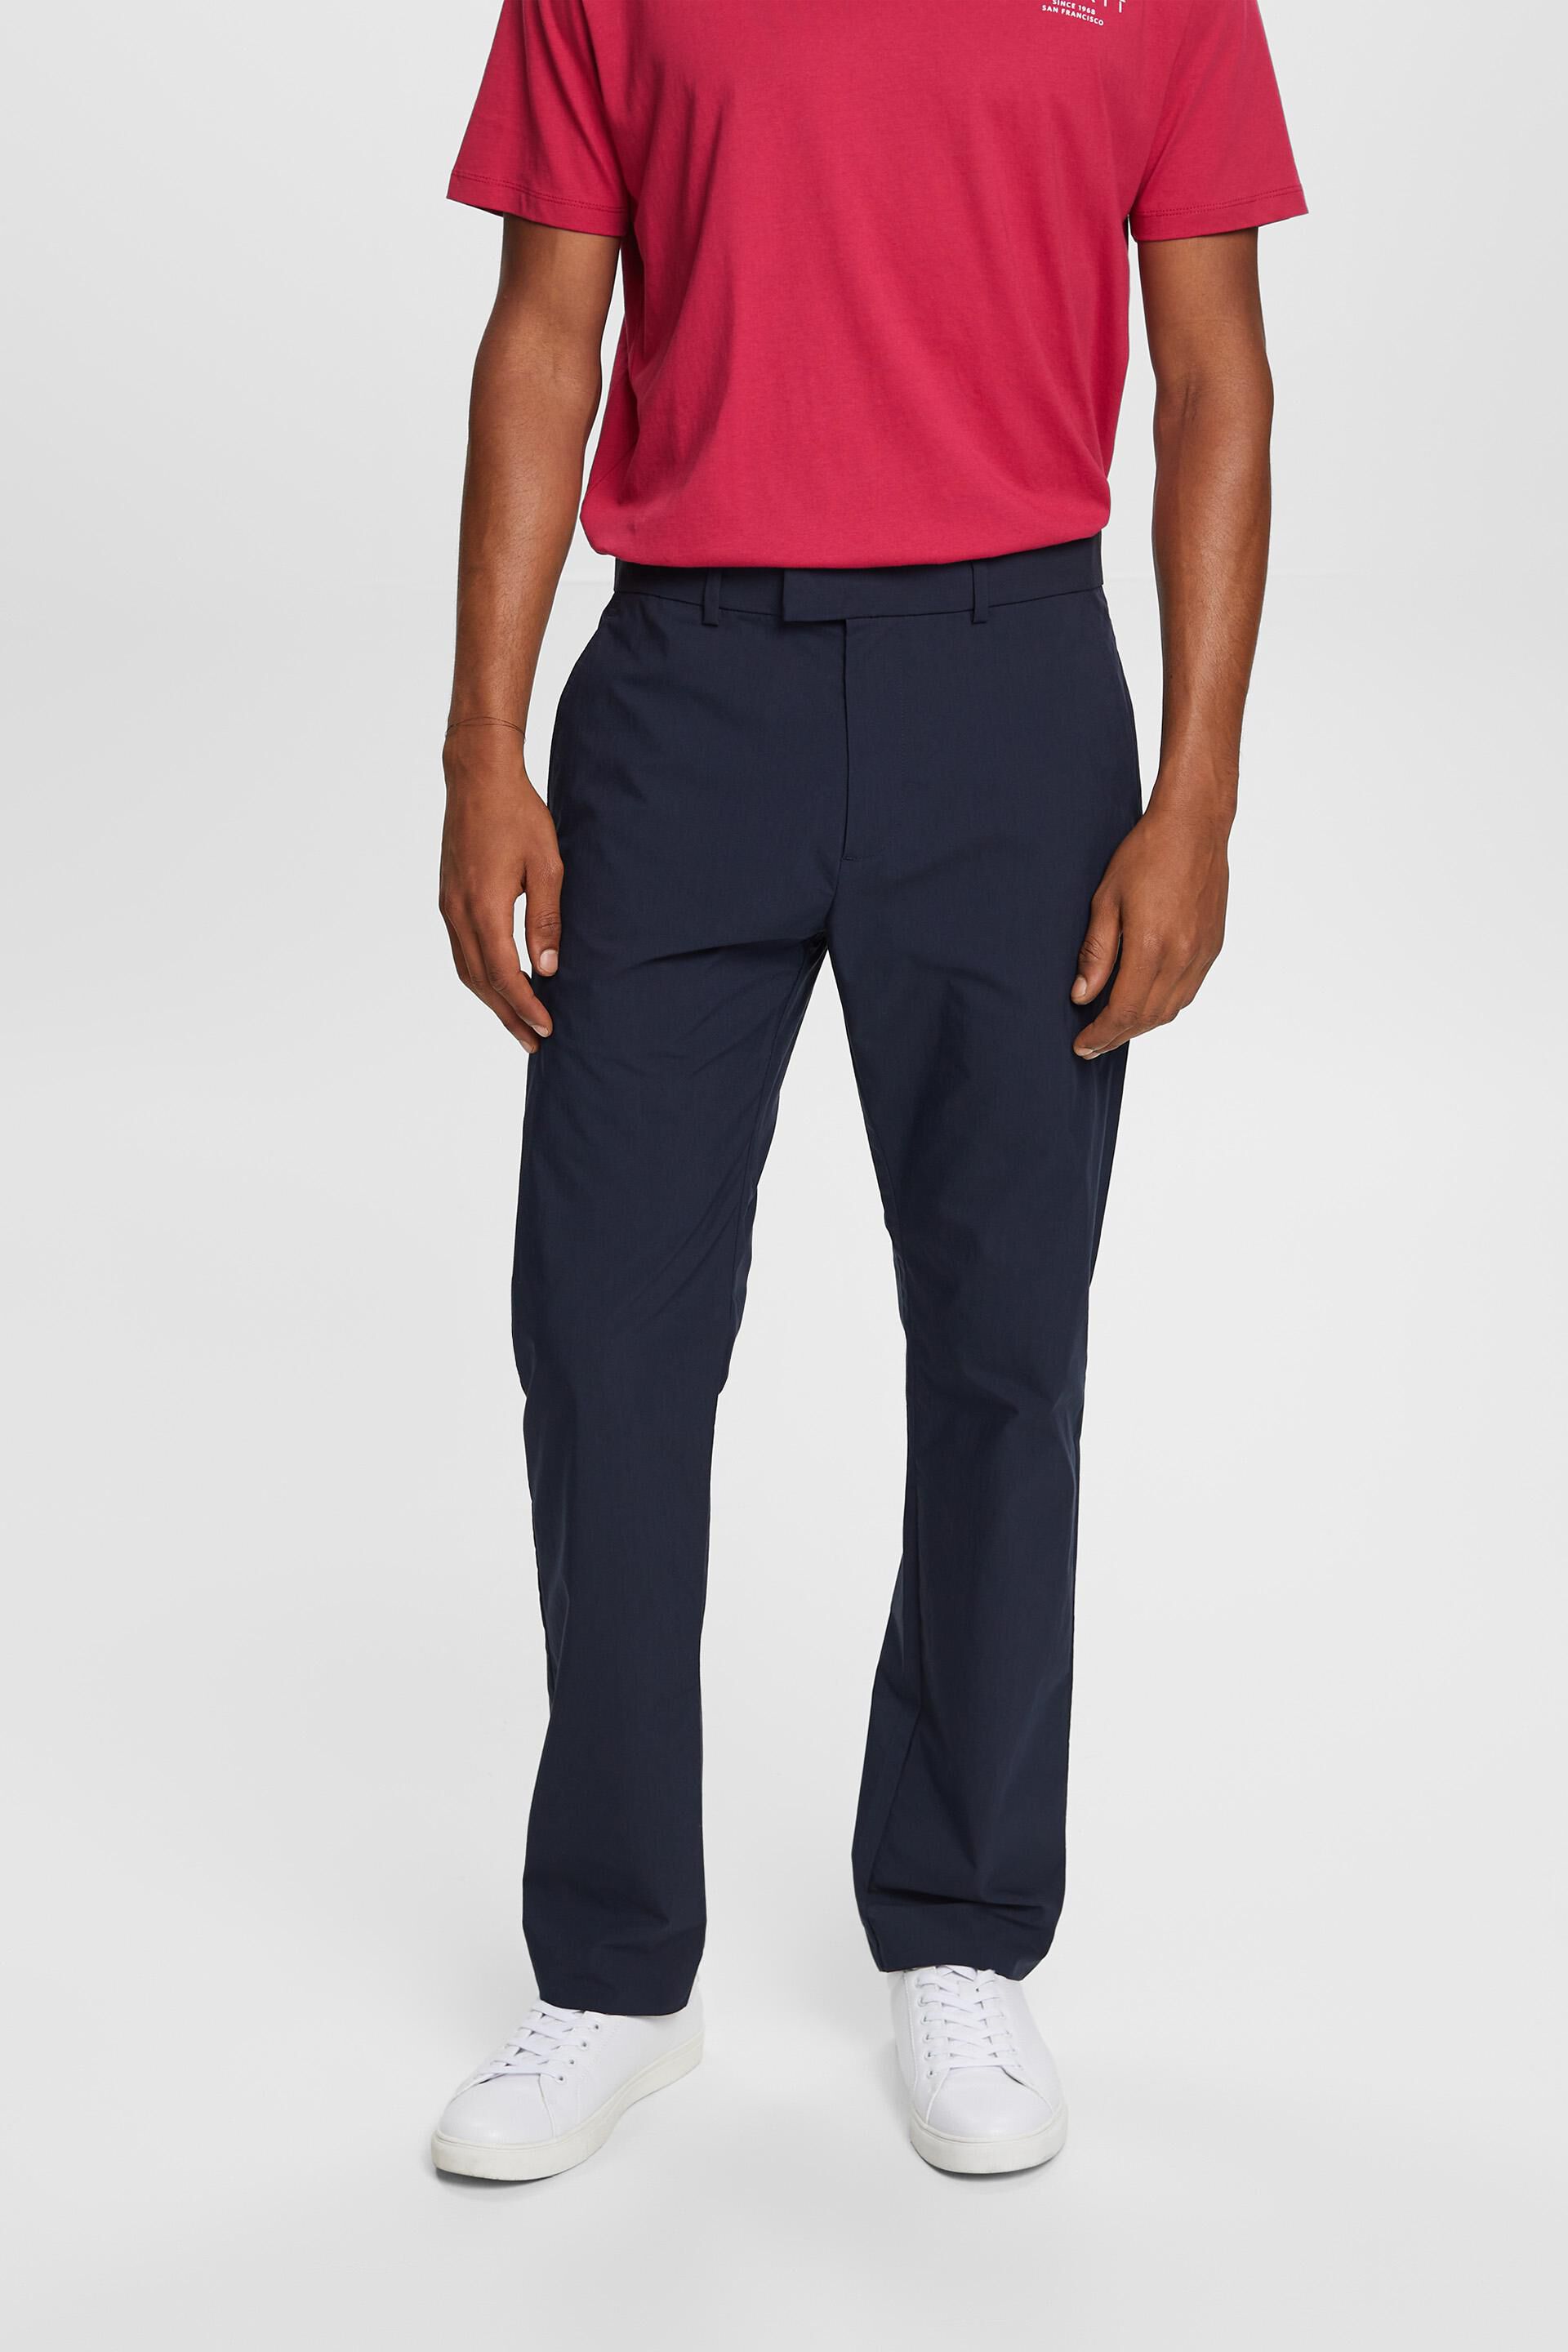 Esprit cotton chino trousers, blend Lightweight